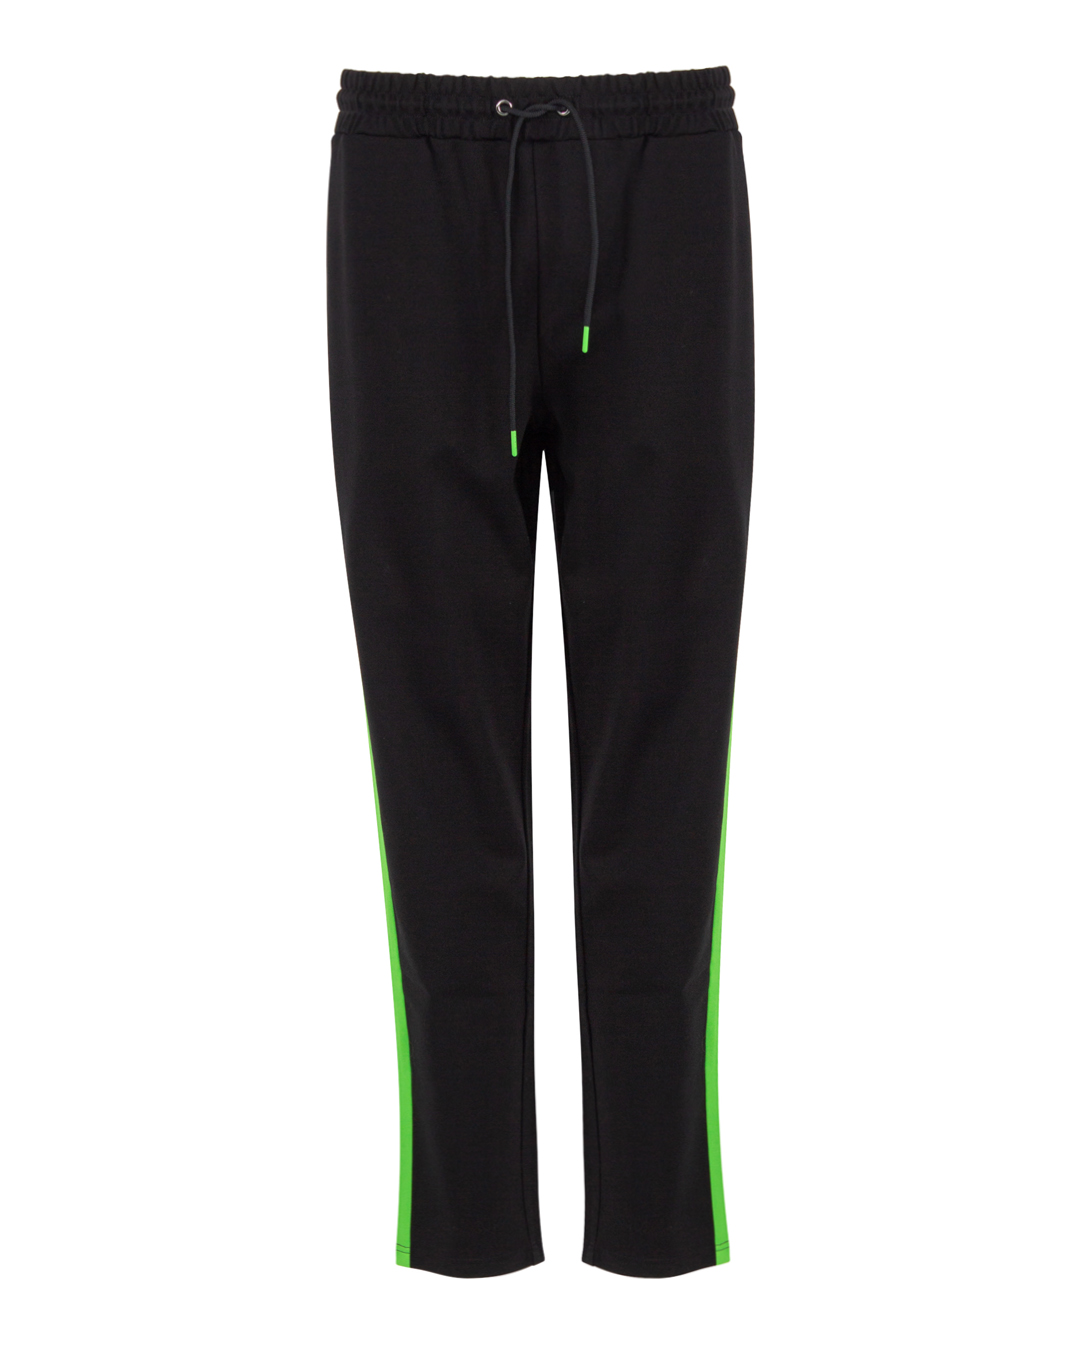 брюки Harmont & Blaine FRK155 черный+зеленый l, размер l, цвет черный+зеленый FRK155 черный+зеленый l - фото 1